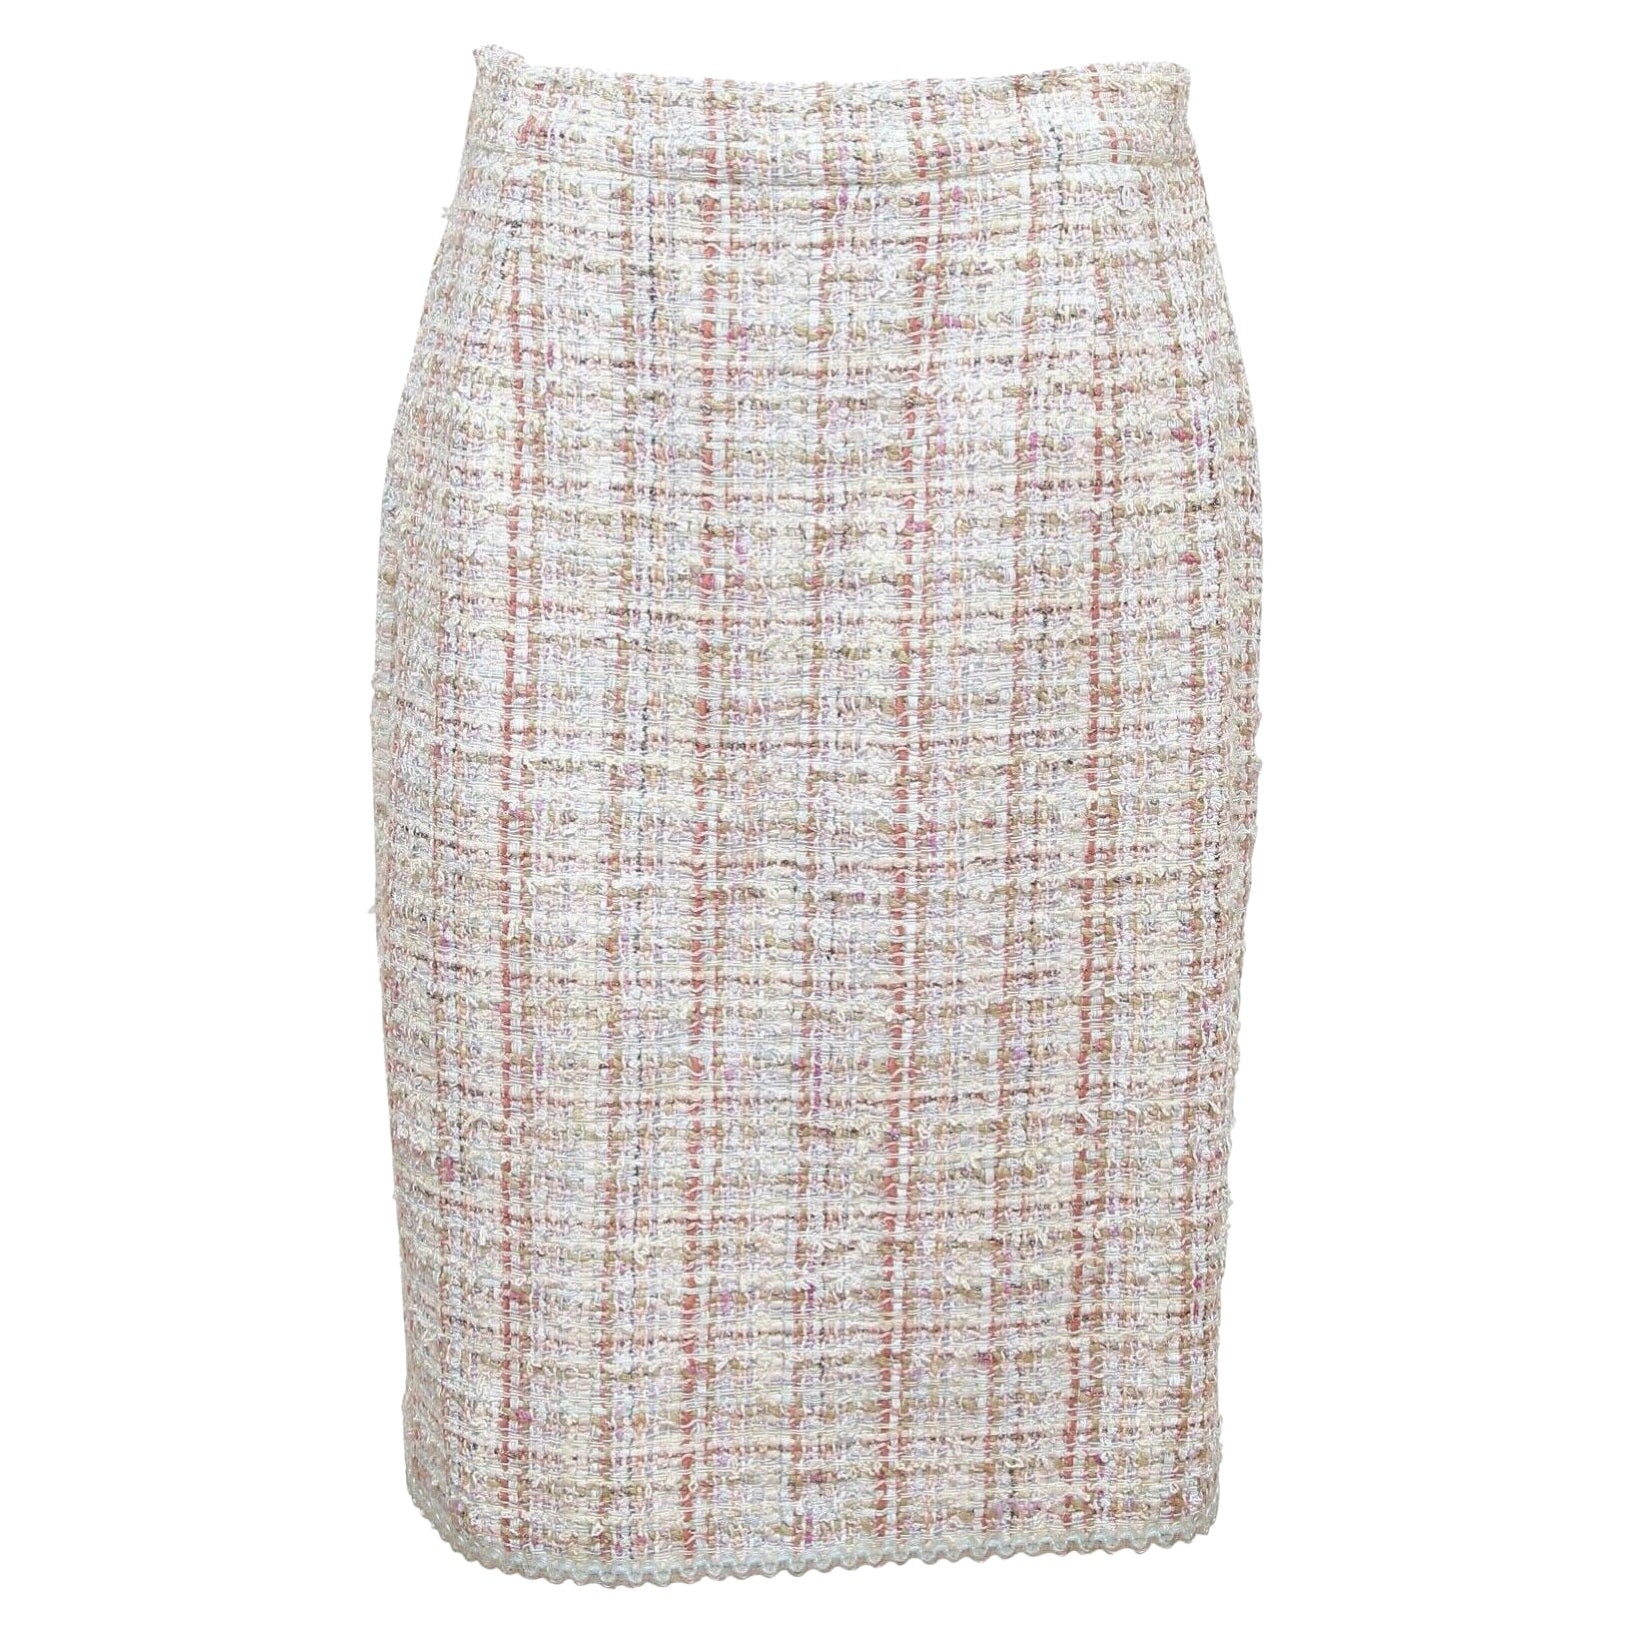 CHANEL Tweed Skirt Fantasy Multi-Color Camellia Cotton 2013 RUNWAY SZ 40 For Sale